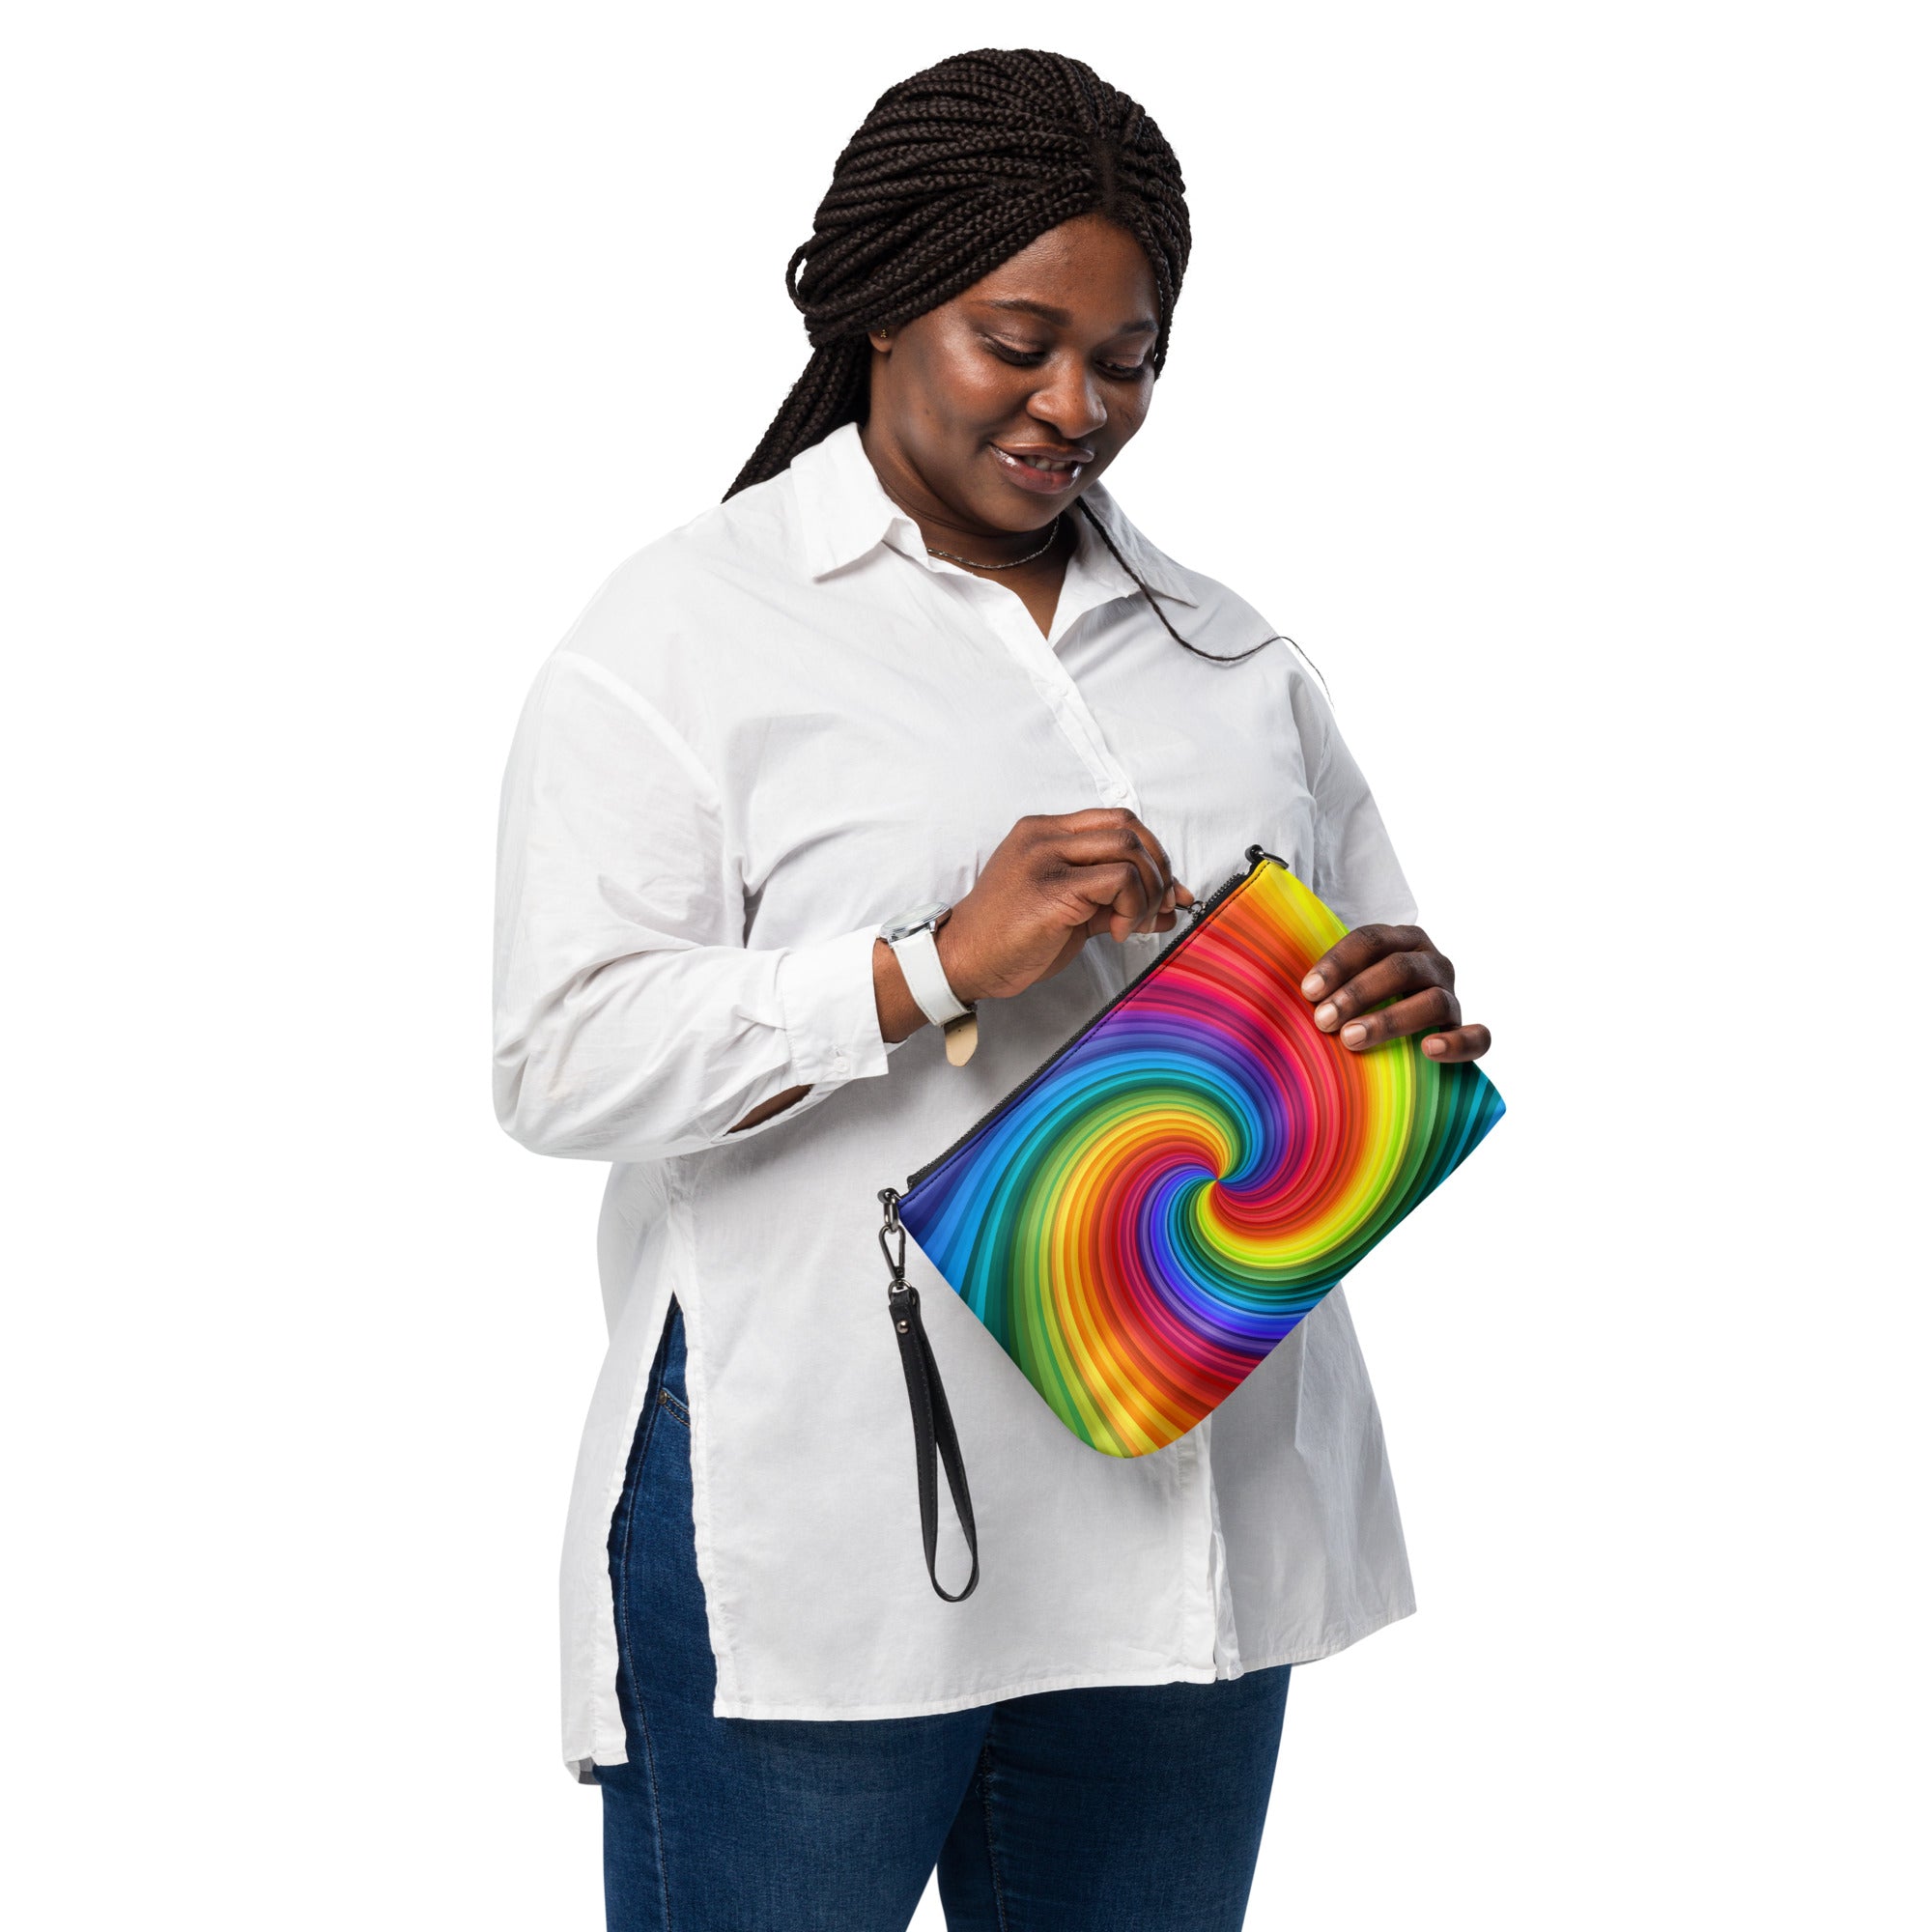 Rainbow Swirl Tie Dye Crossbody Bag